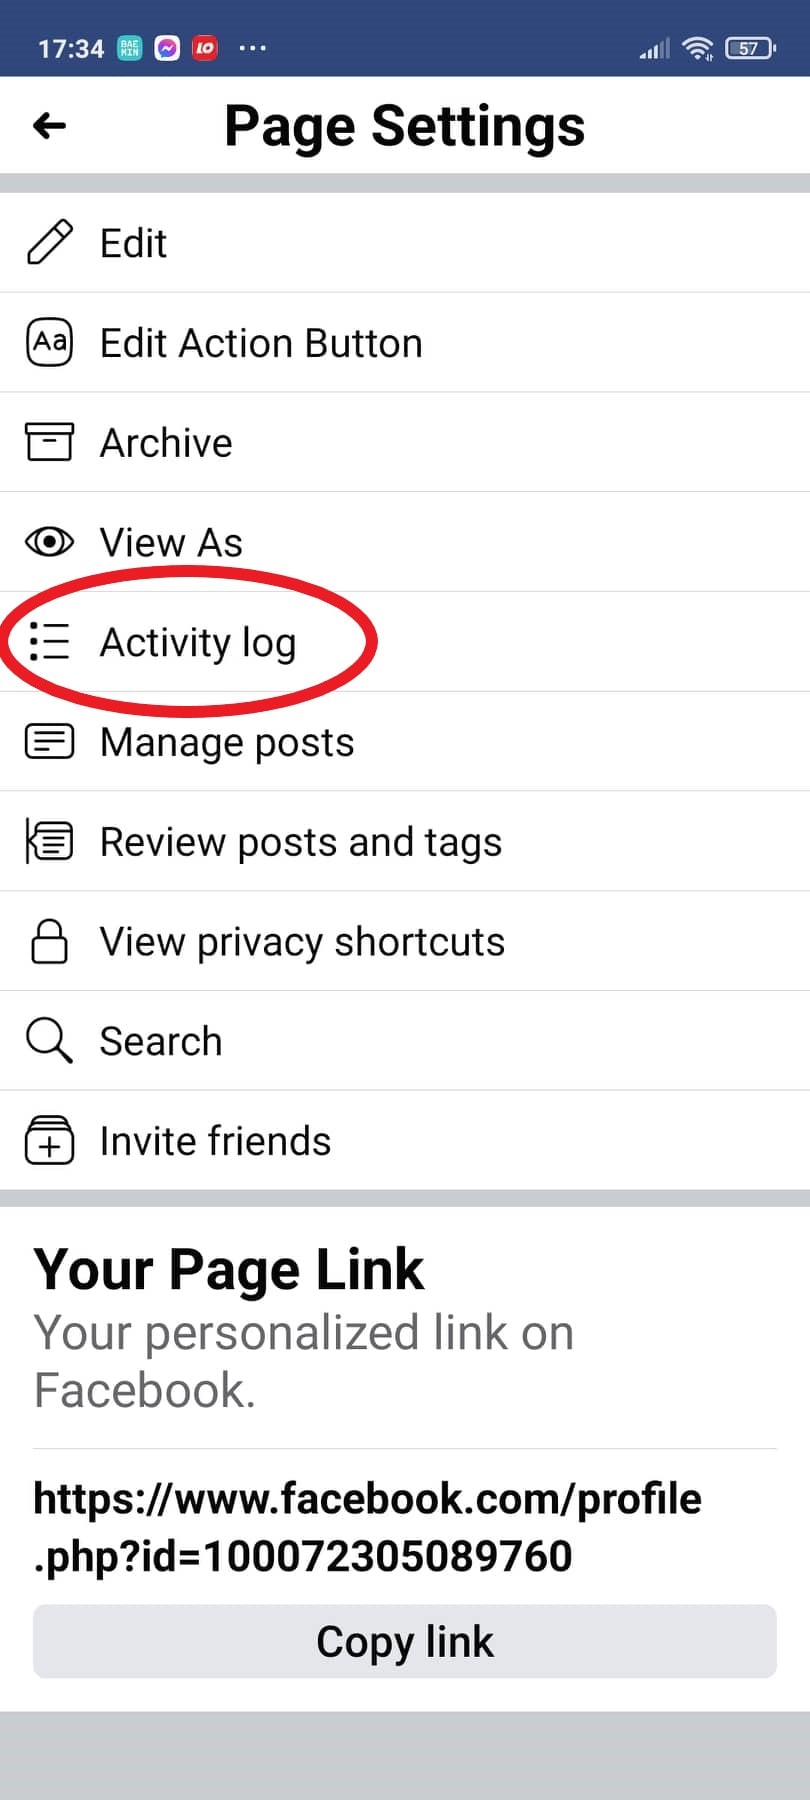 Click on Activity log